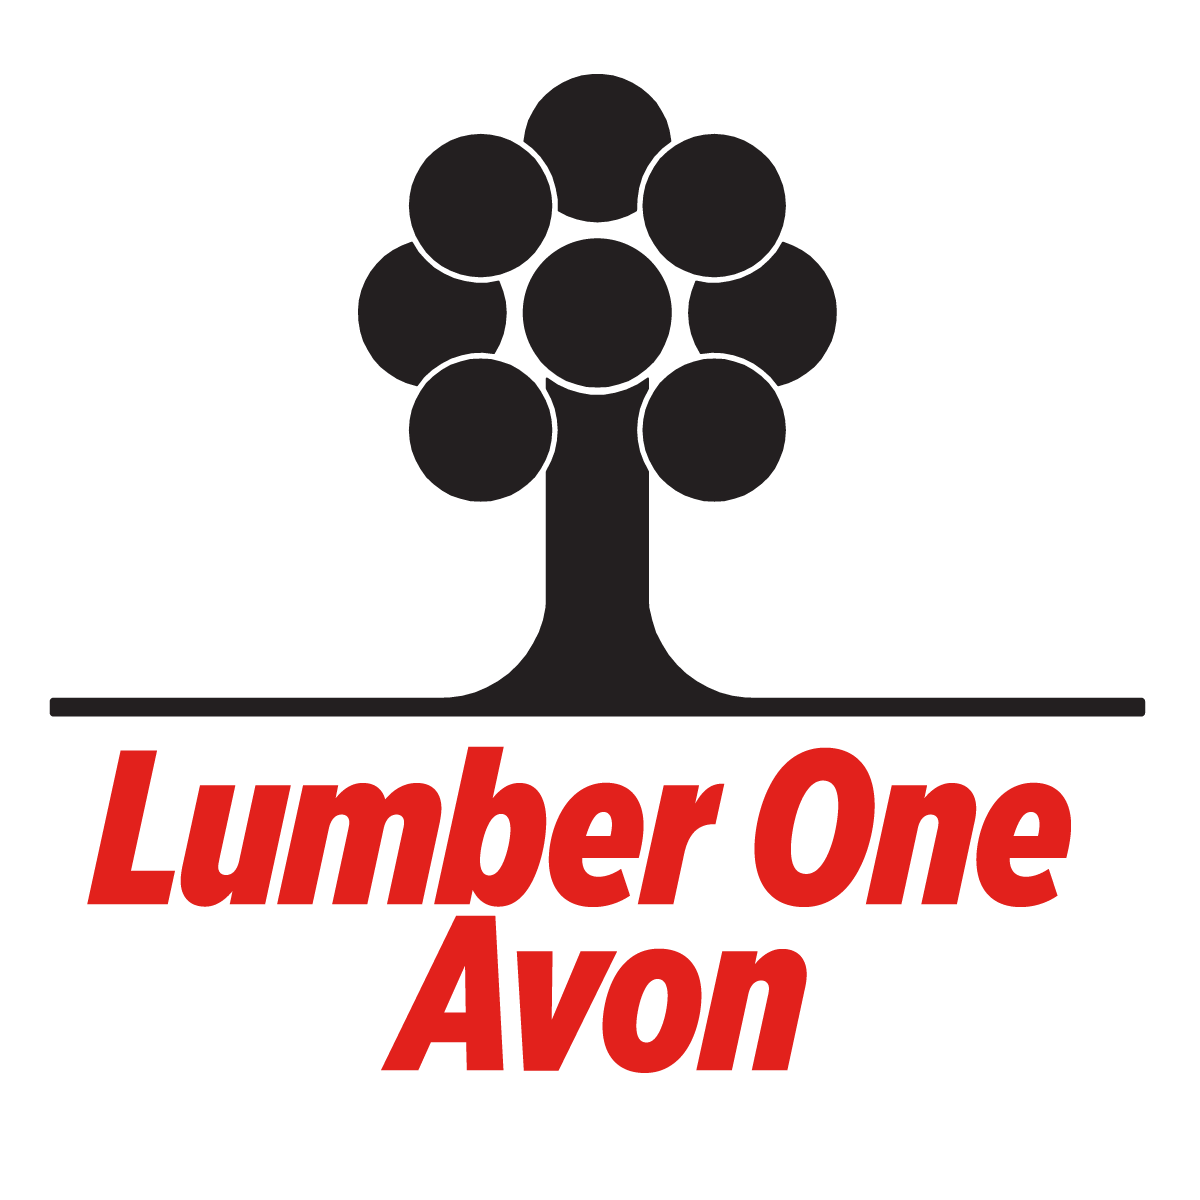 Lumber One, Avon Inc. Logo